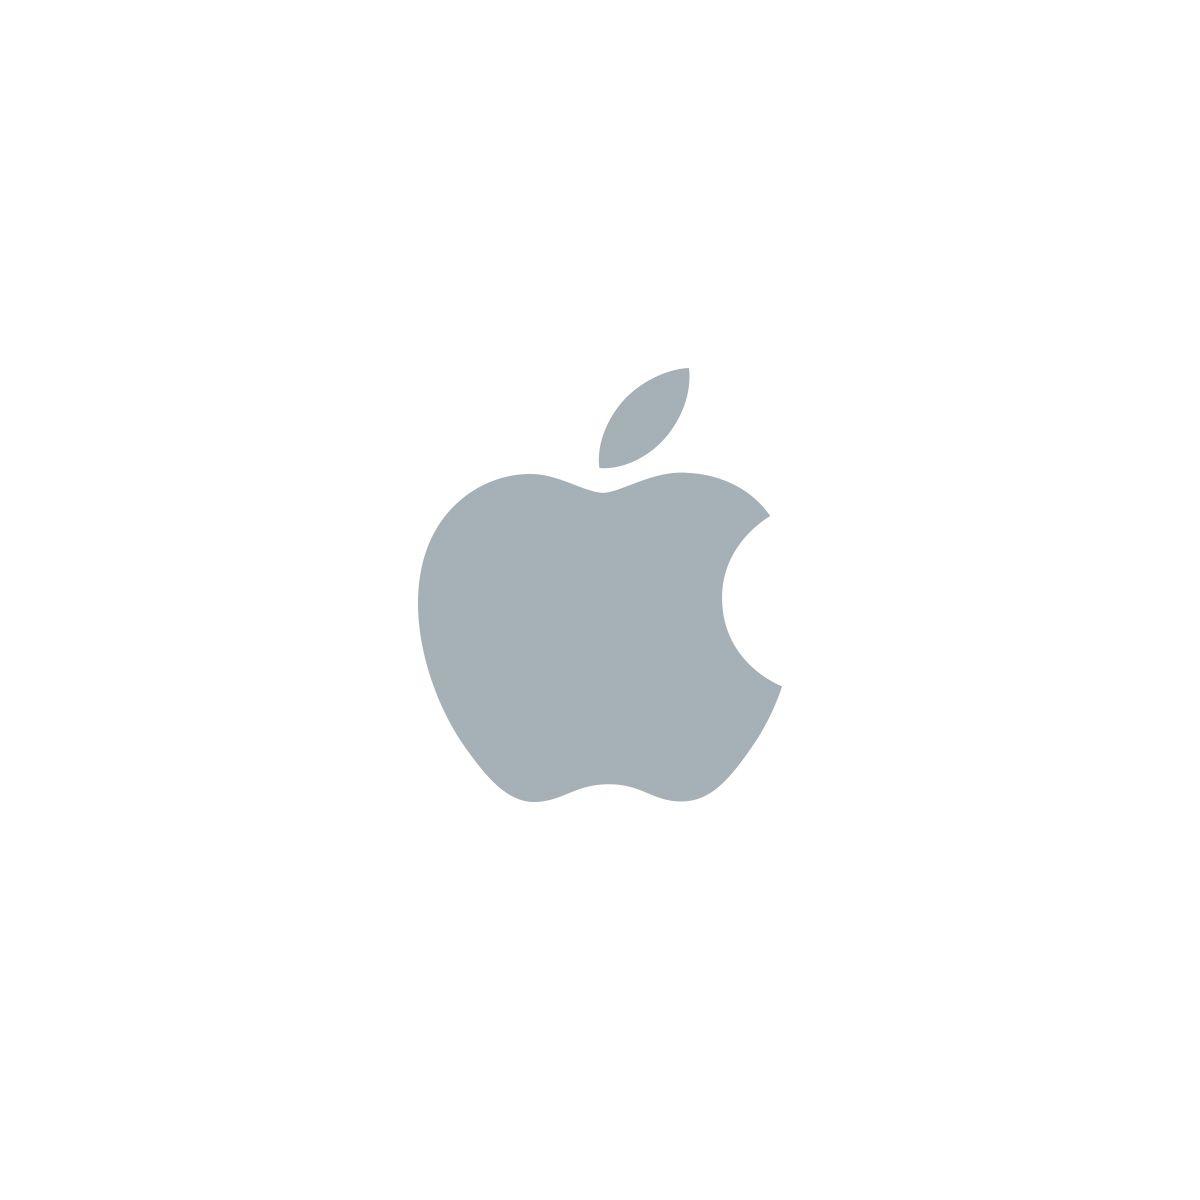 Windows App Store Logo - iTunes - Upgrade to Get iTunes Now - Apple